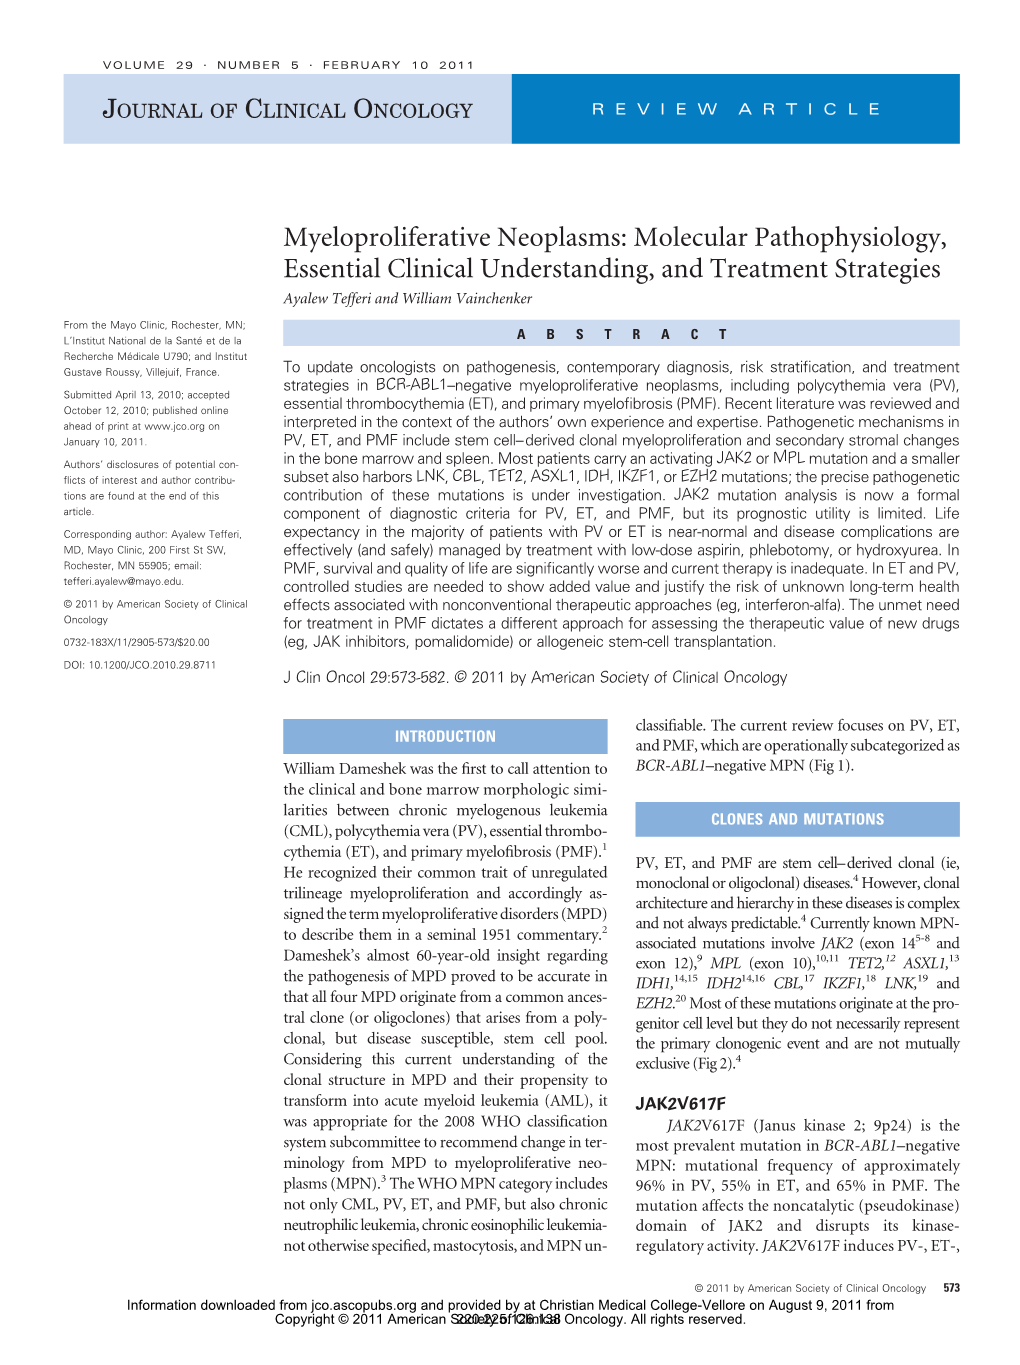 Myeloproliferative Neoplasms: Molecular Pathophysiology, Essential Clinical Understanding, and Treatment Strategies Ayalew Tefferi and William Vainchenker